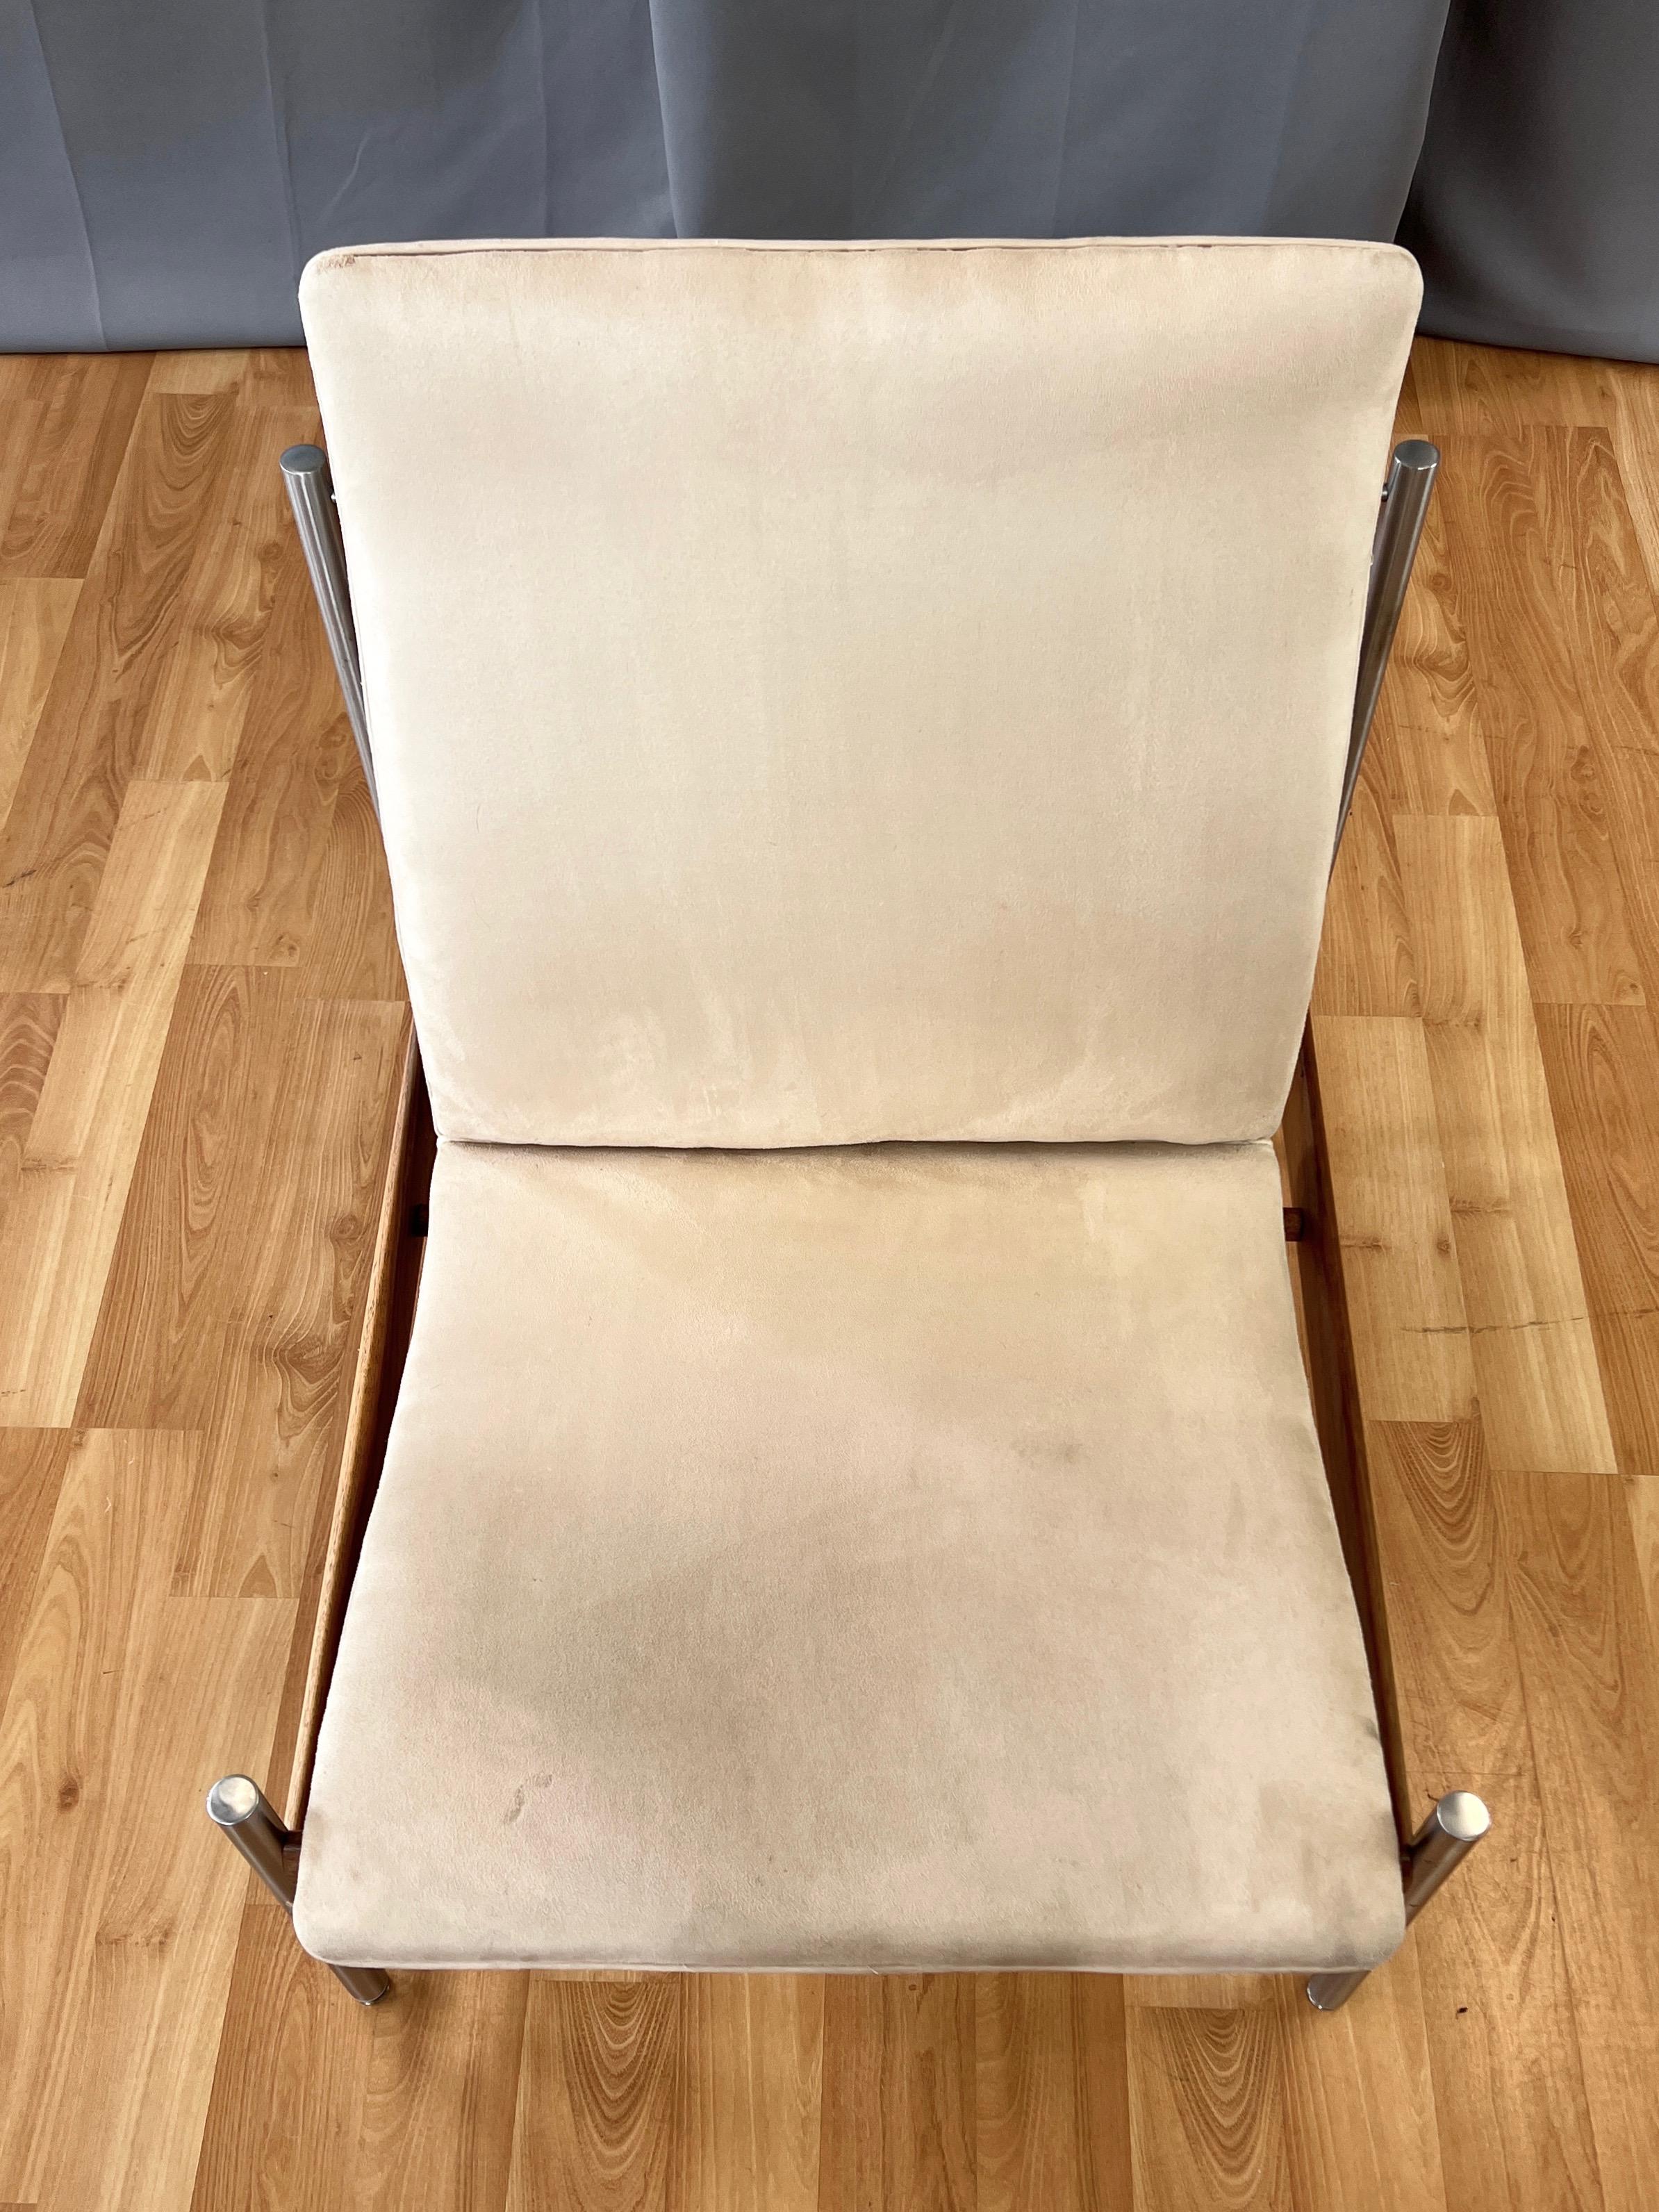 Sven Ivar Dysthe for Dokka Møbler Teak and Nickel Armless Lounge Chair, 1960s For Sale 4